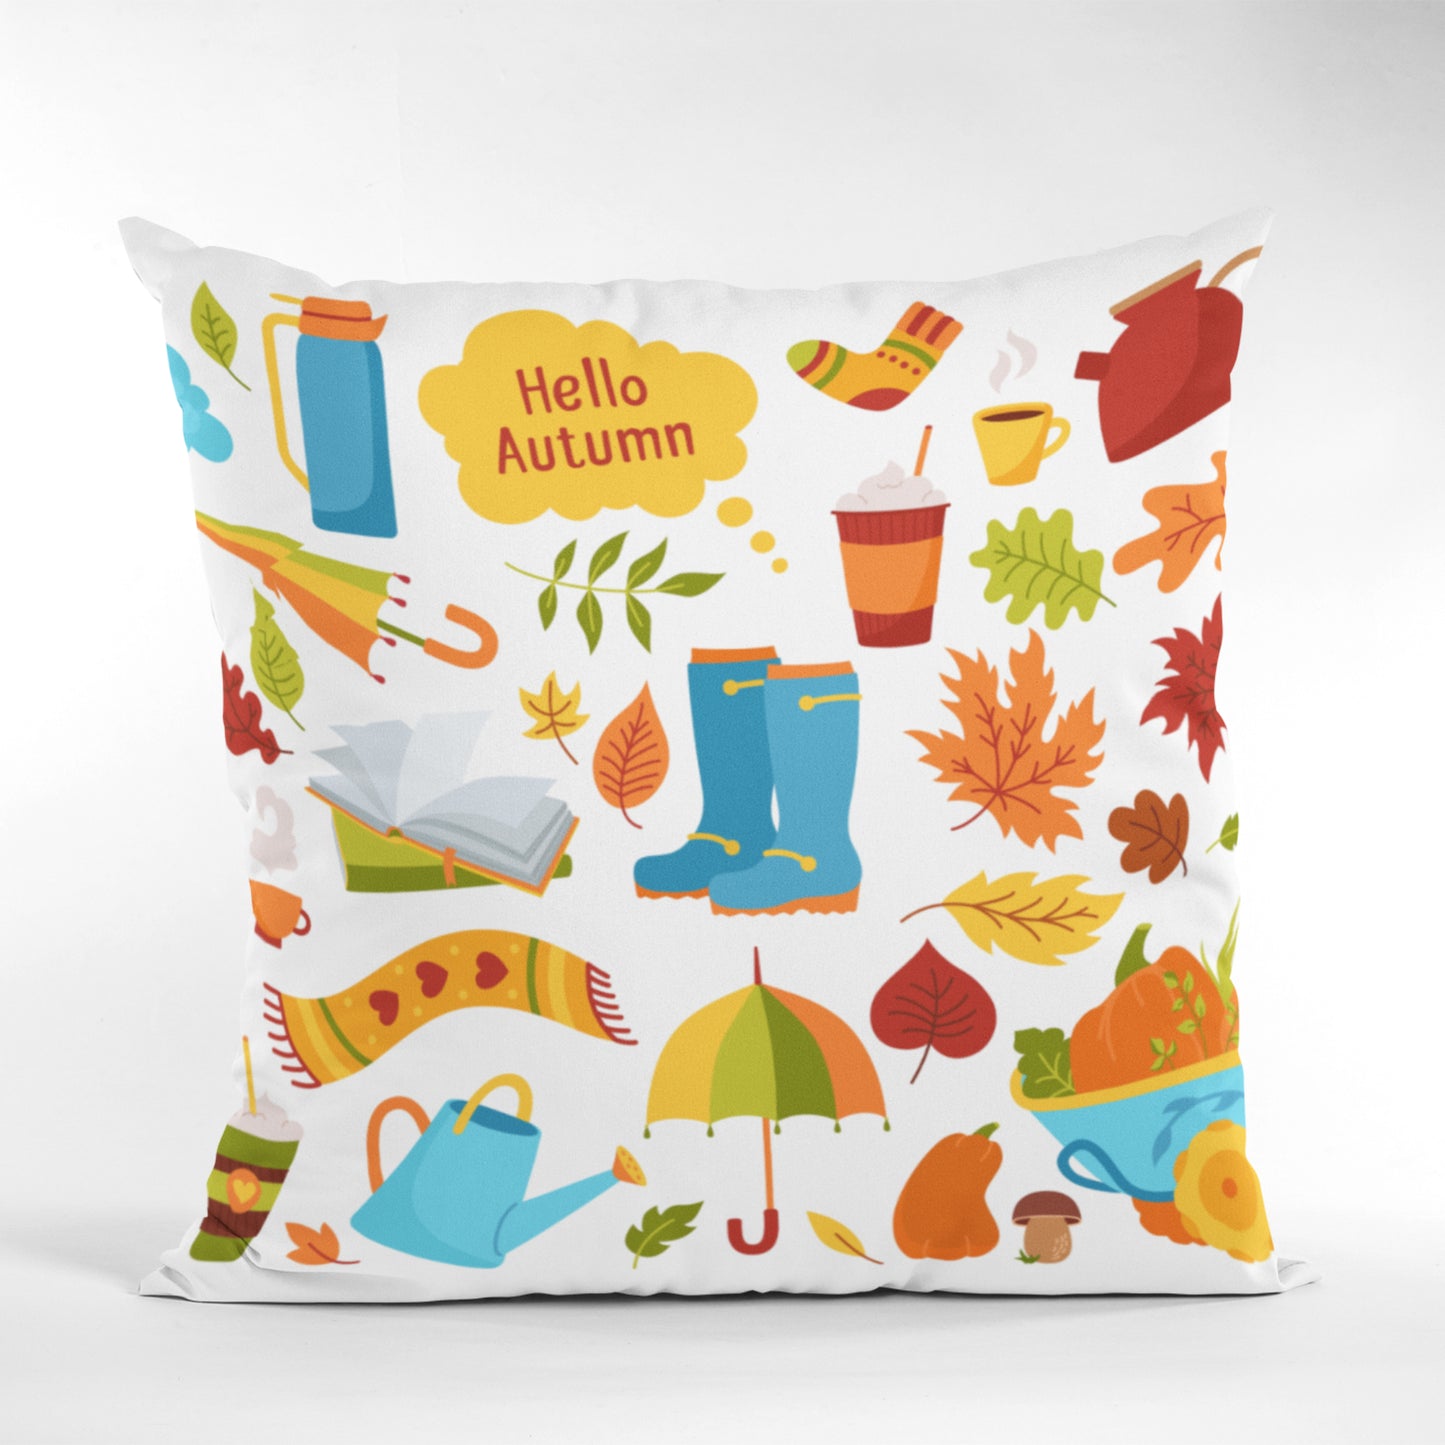 Hello Autumn Kids Room Decorative Throw Pillow , Kids Pillow Case by Homeezone